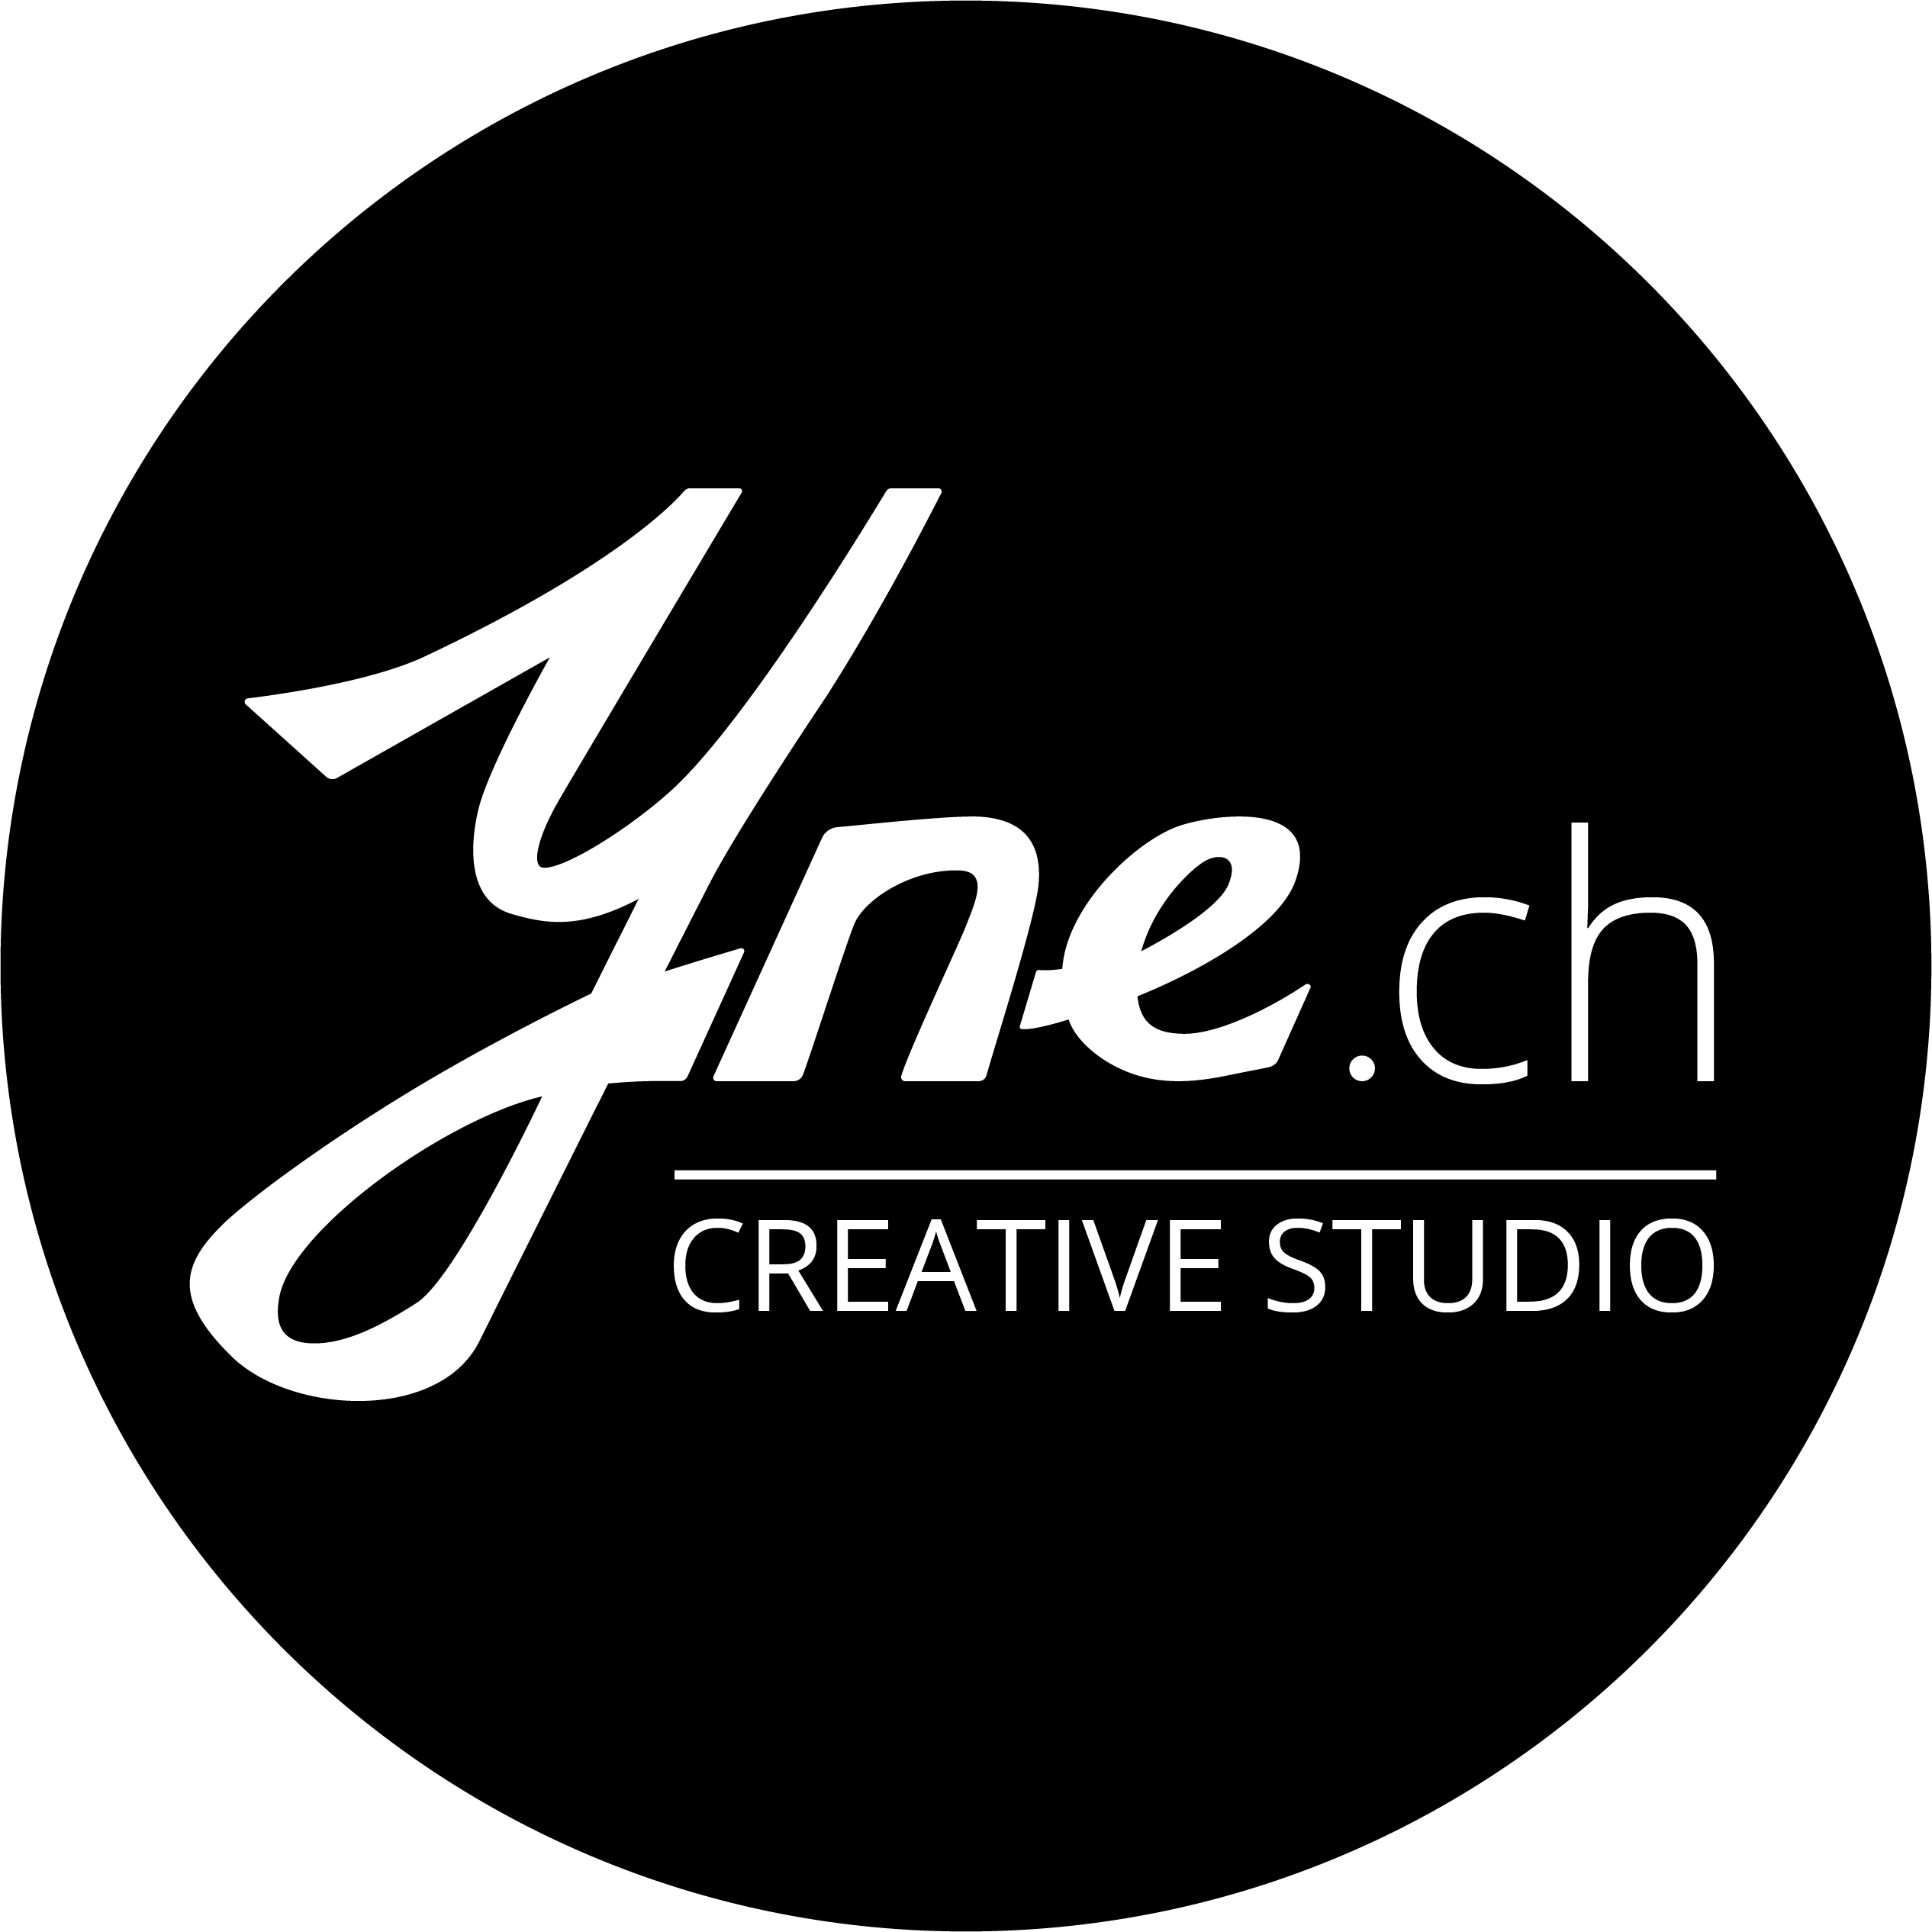 yne.ch - Creative Studio